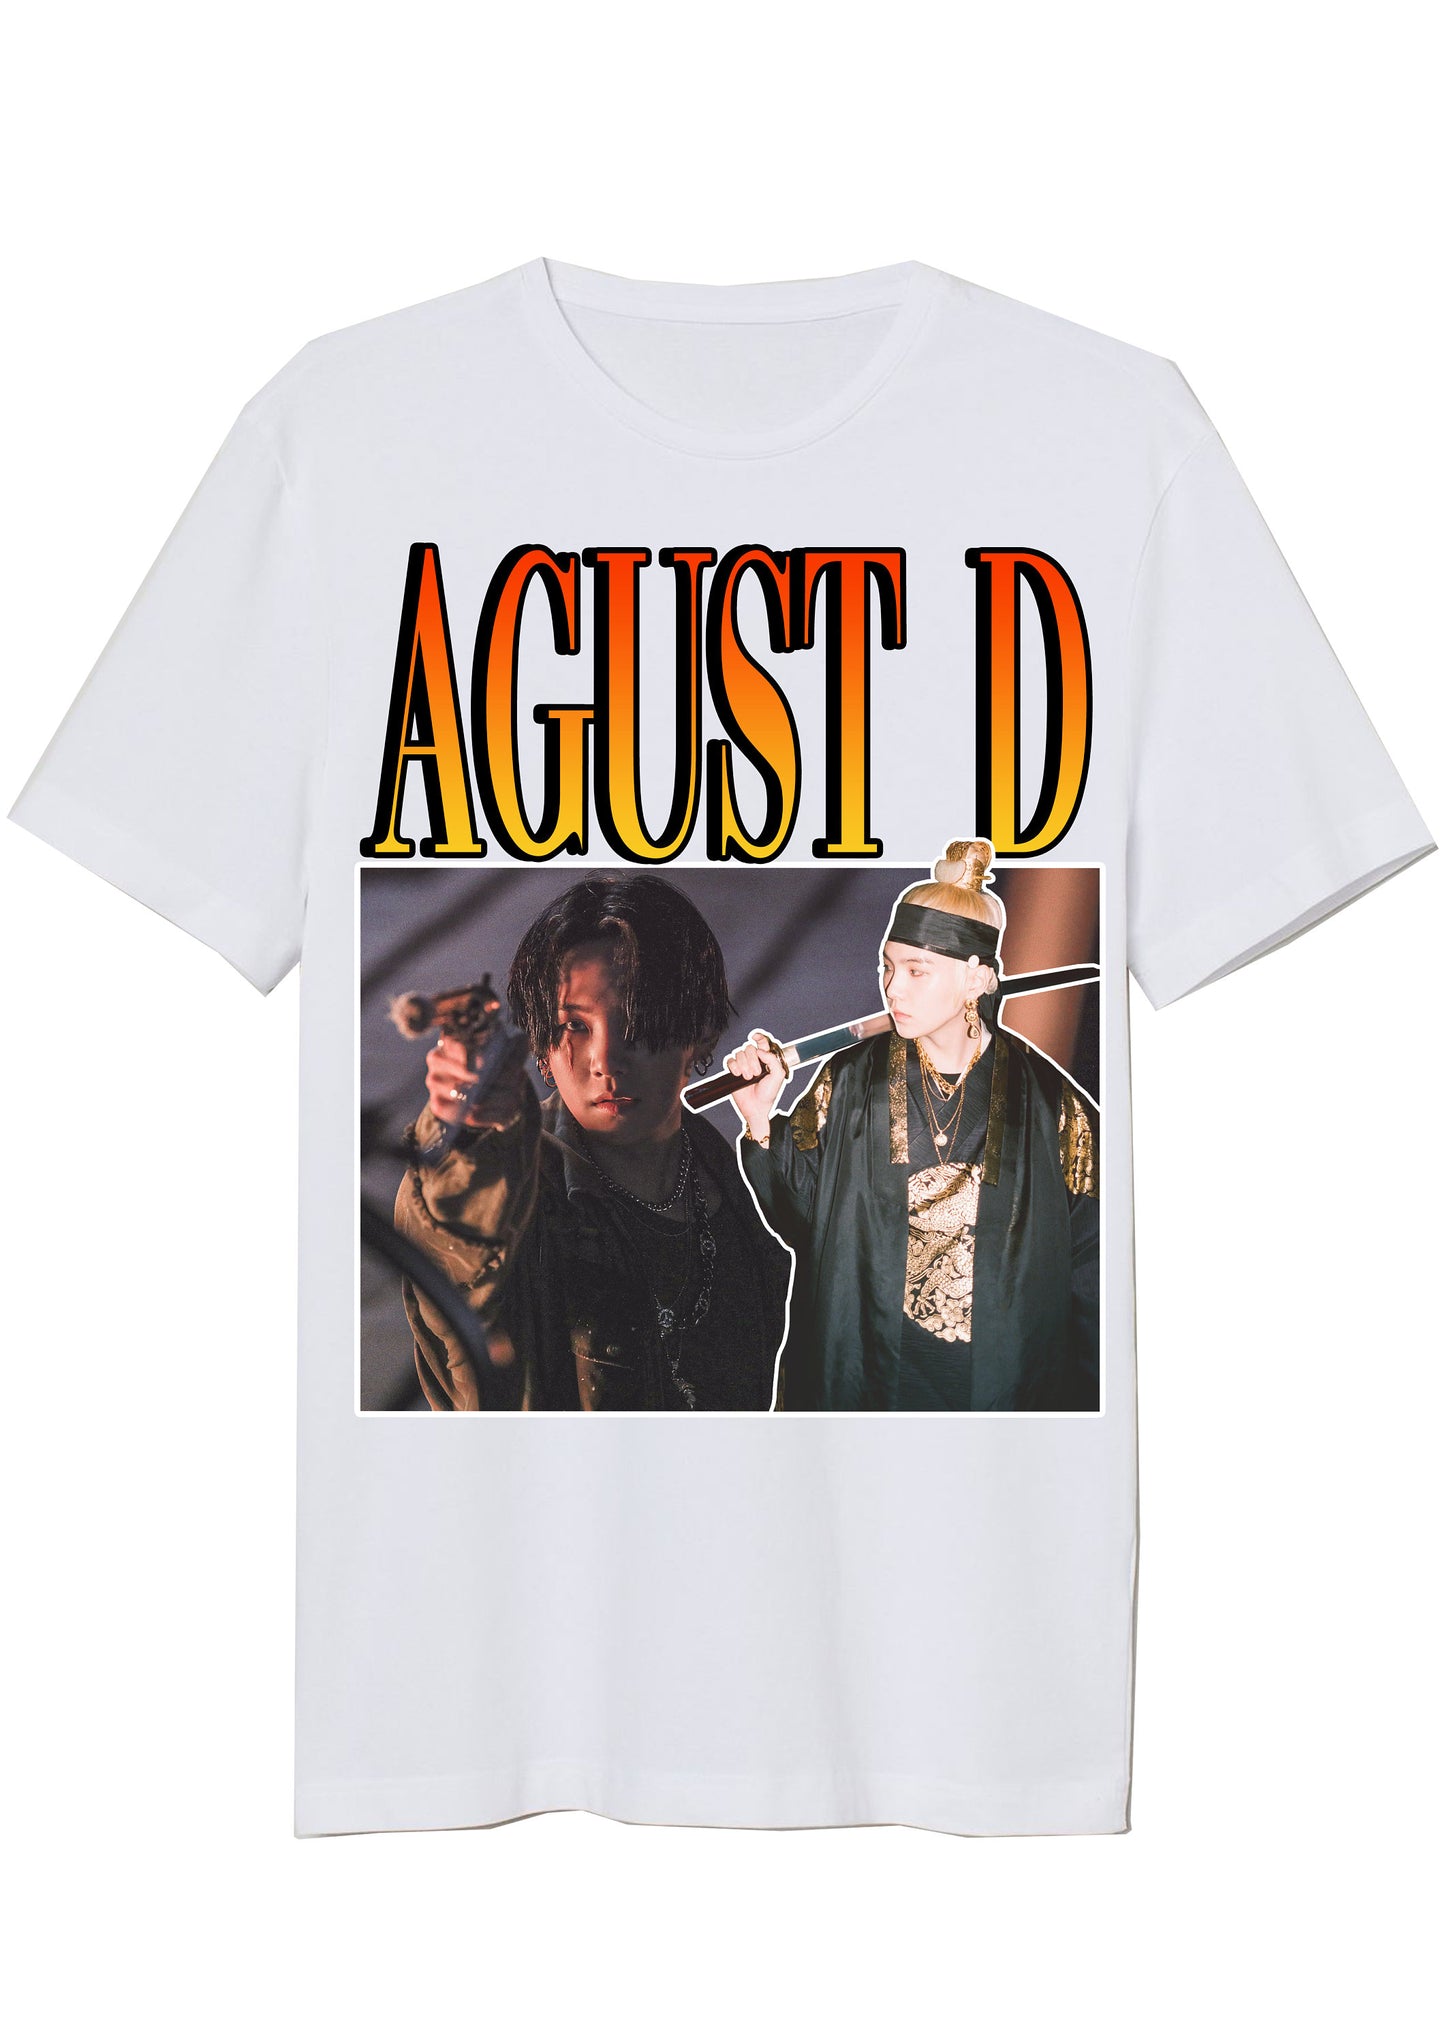 Kids Agust D Daechwita Inspired Vintage T-Shirt